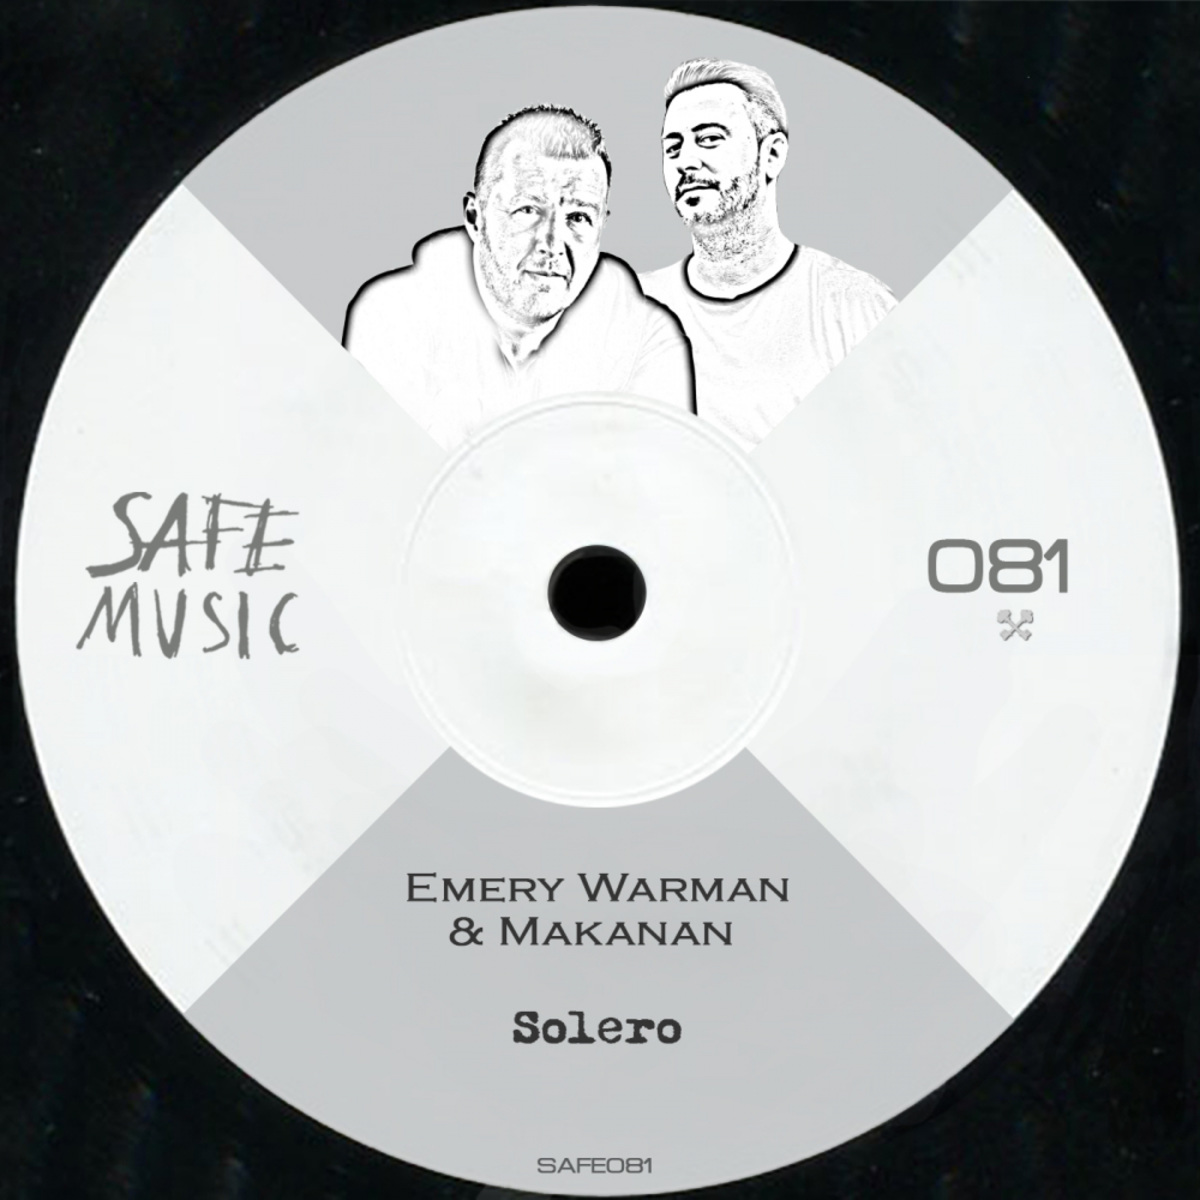 Emery Warman & Makanan - Solero EP / SAFE MUSIC